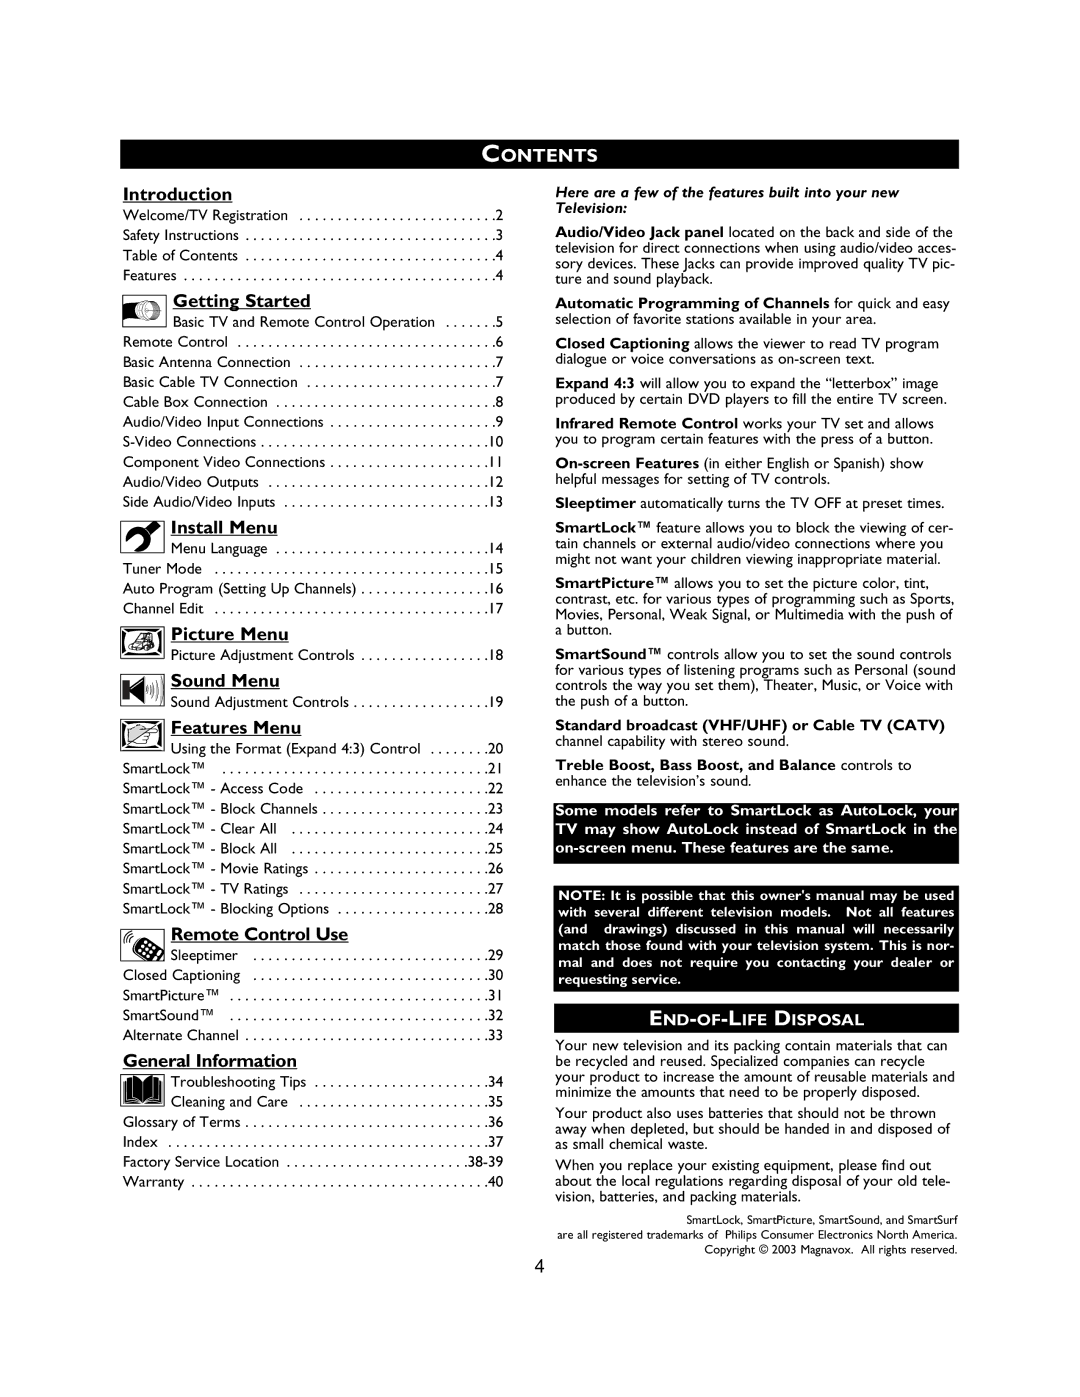 Magnavox 27MS3404R owner manual Contents 